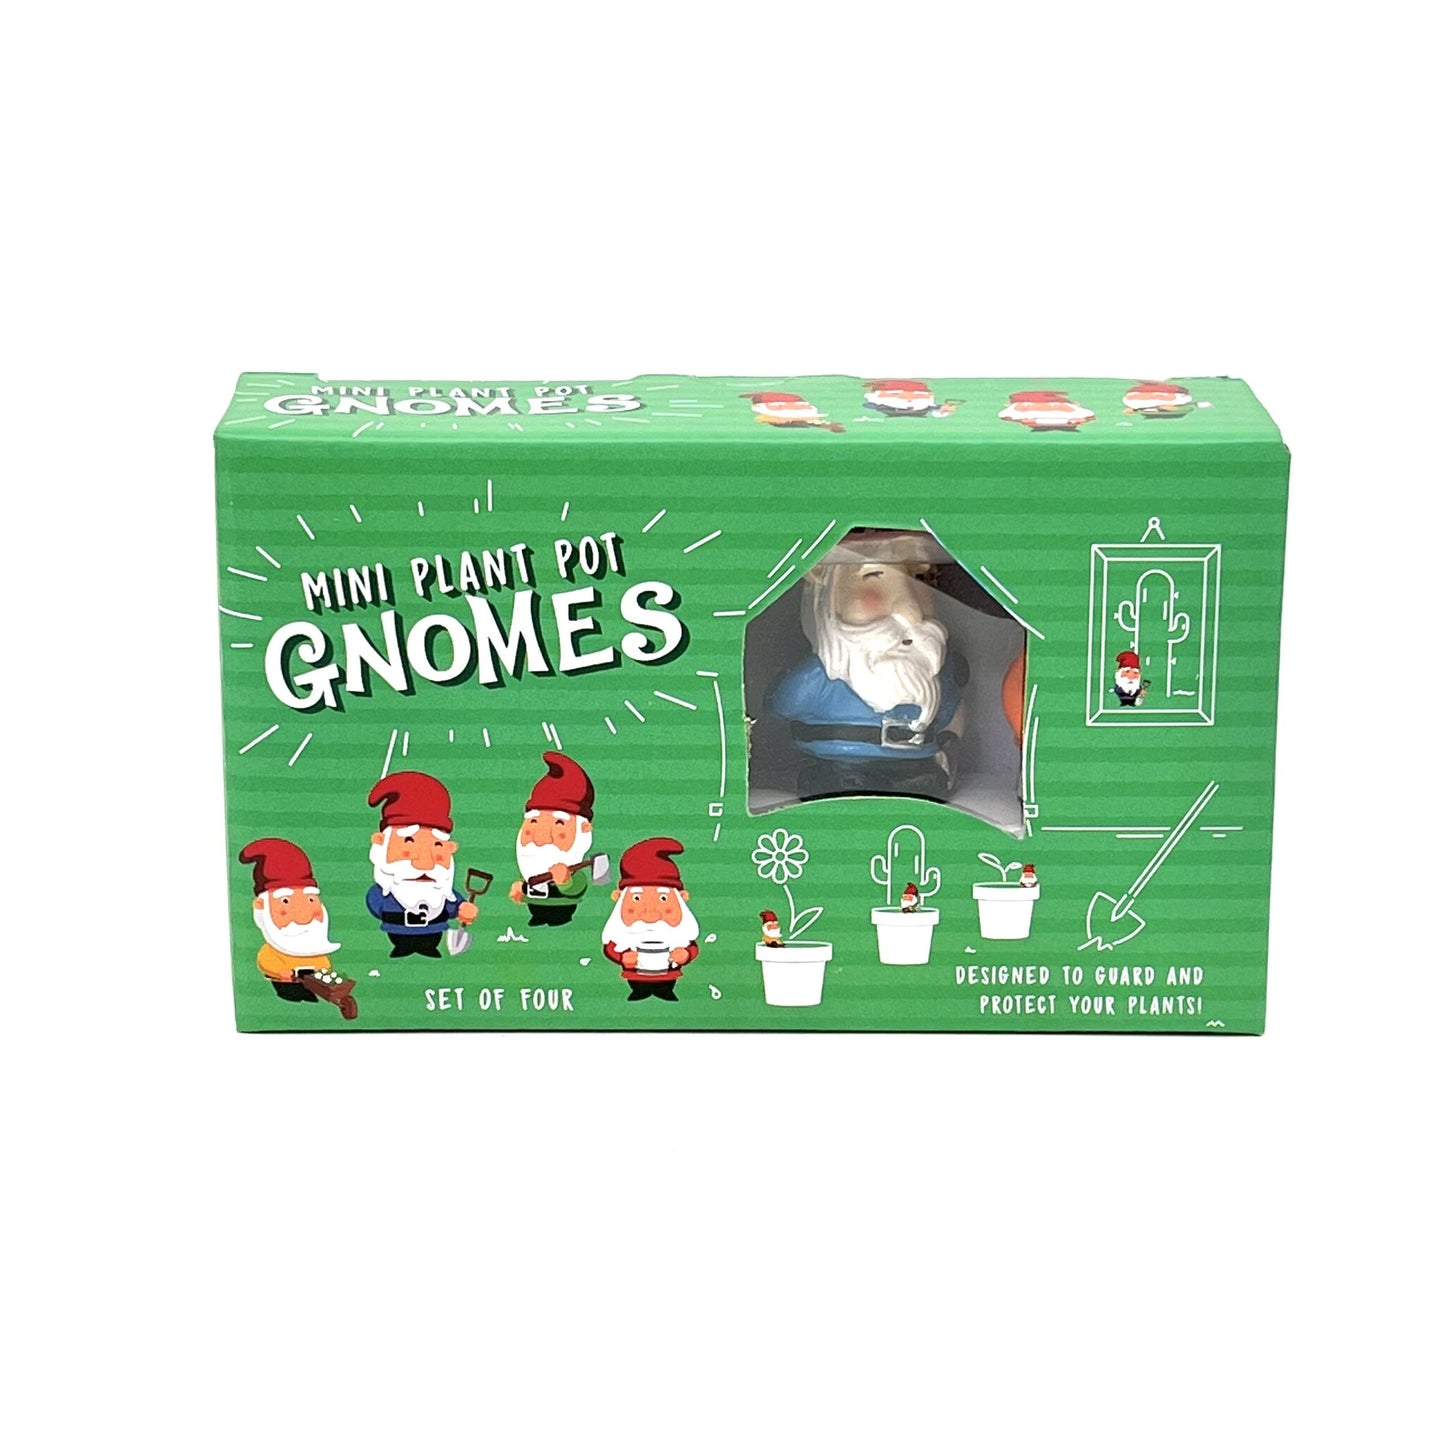 Helping Gnomes